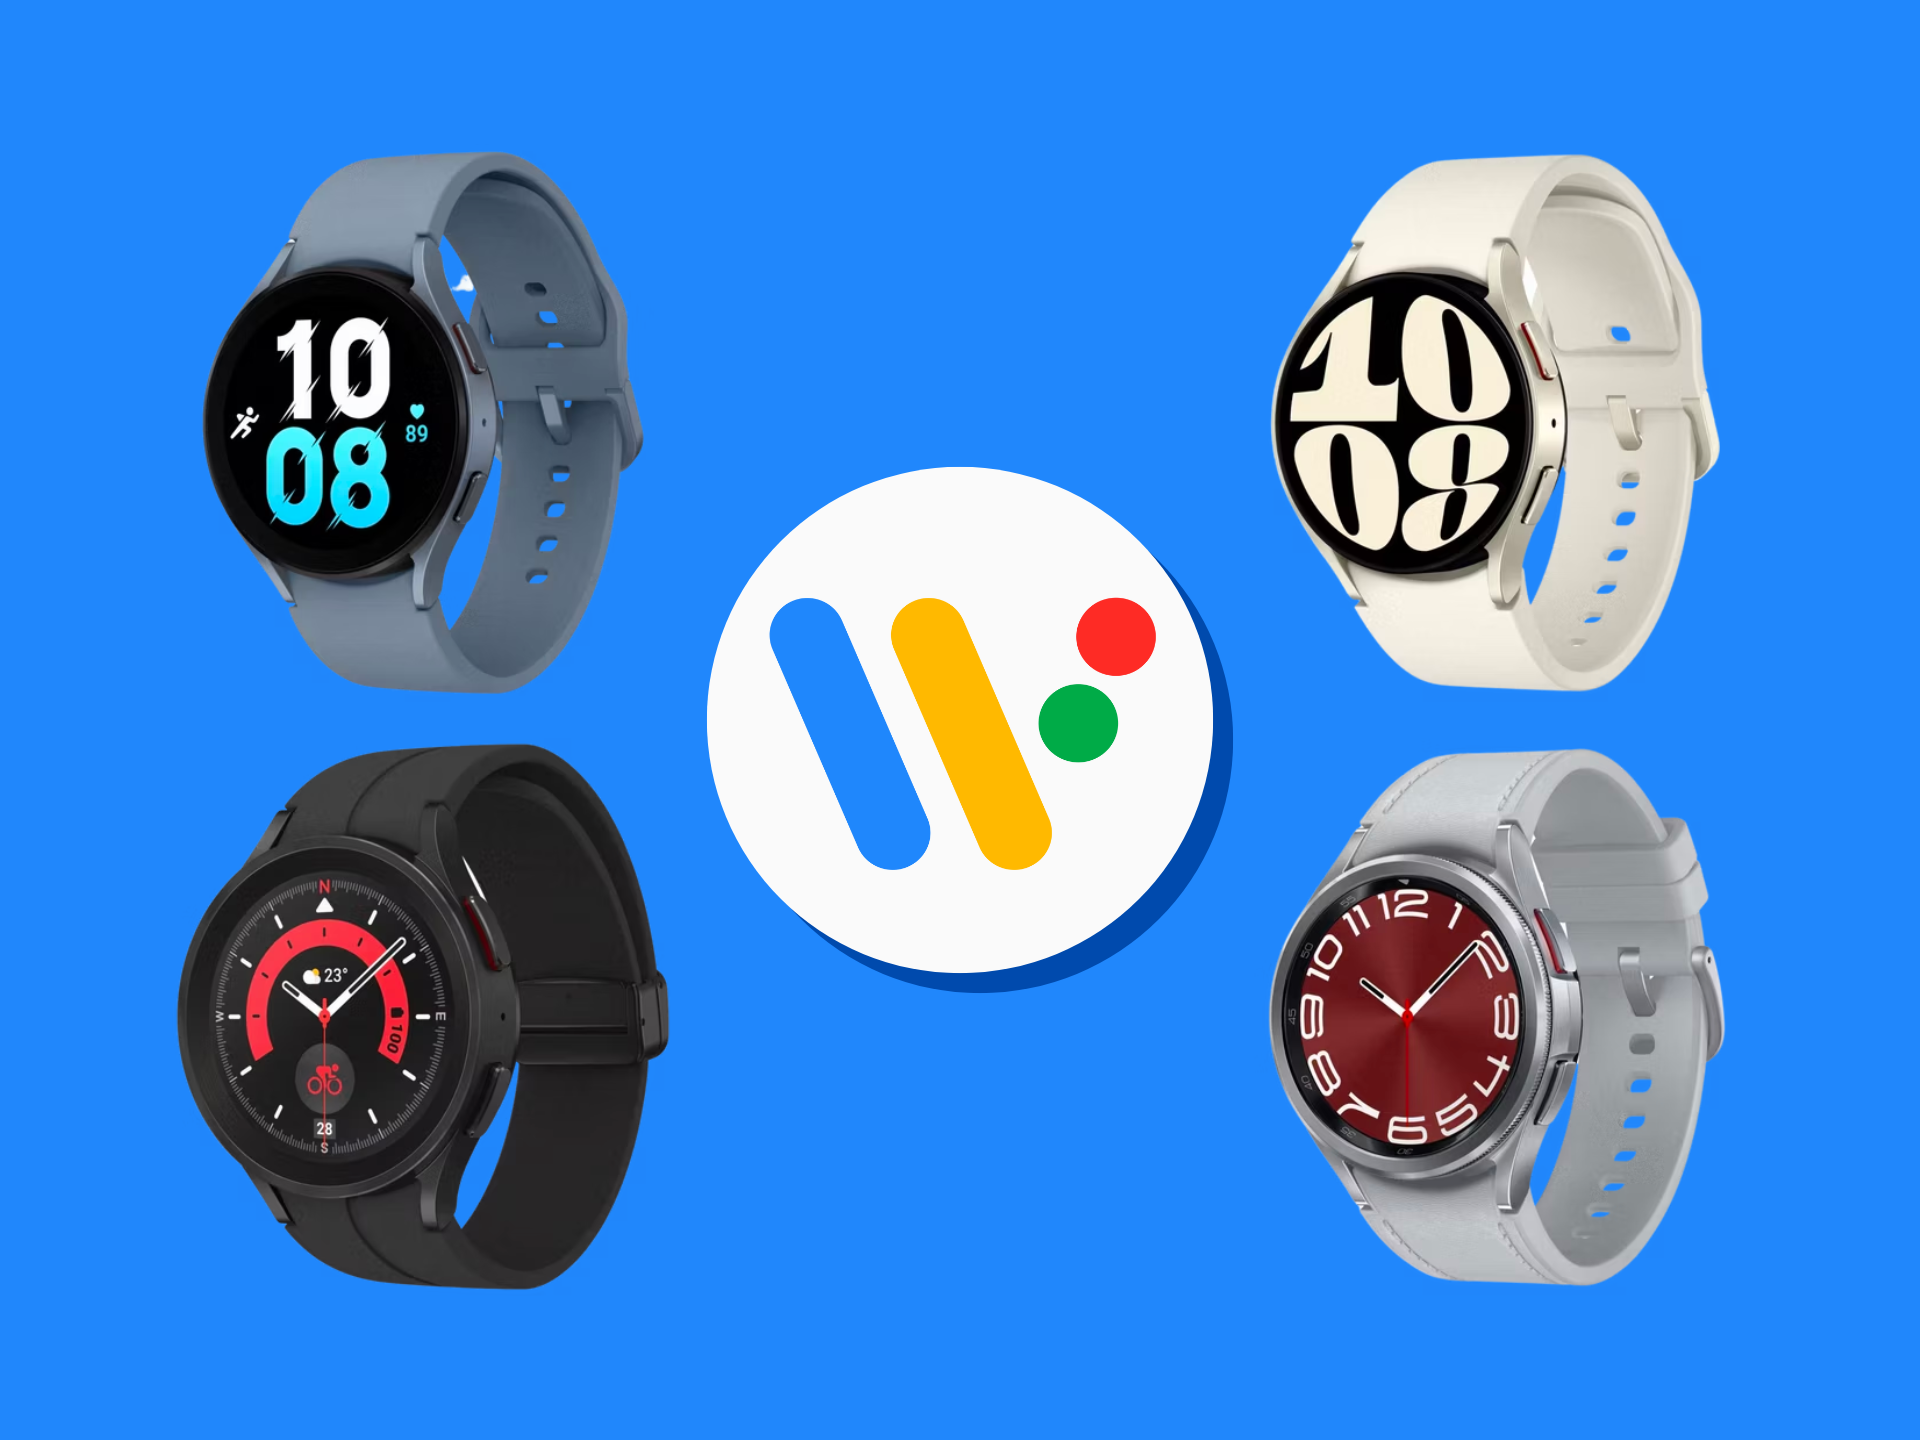 li-state-of-google-wear-os-4-smartwatches-list